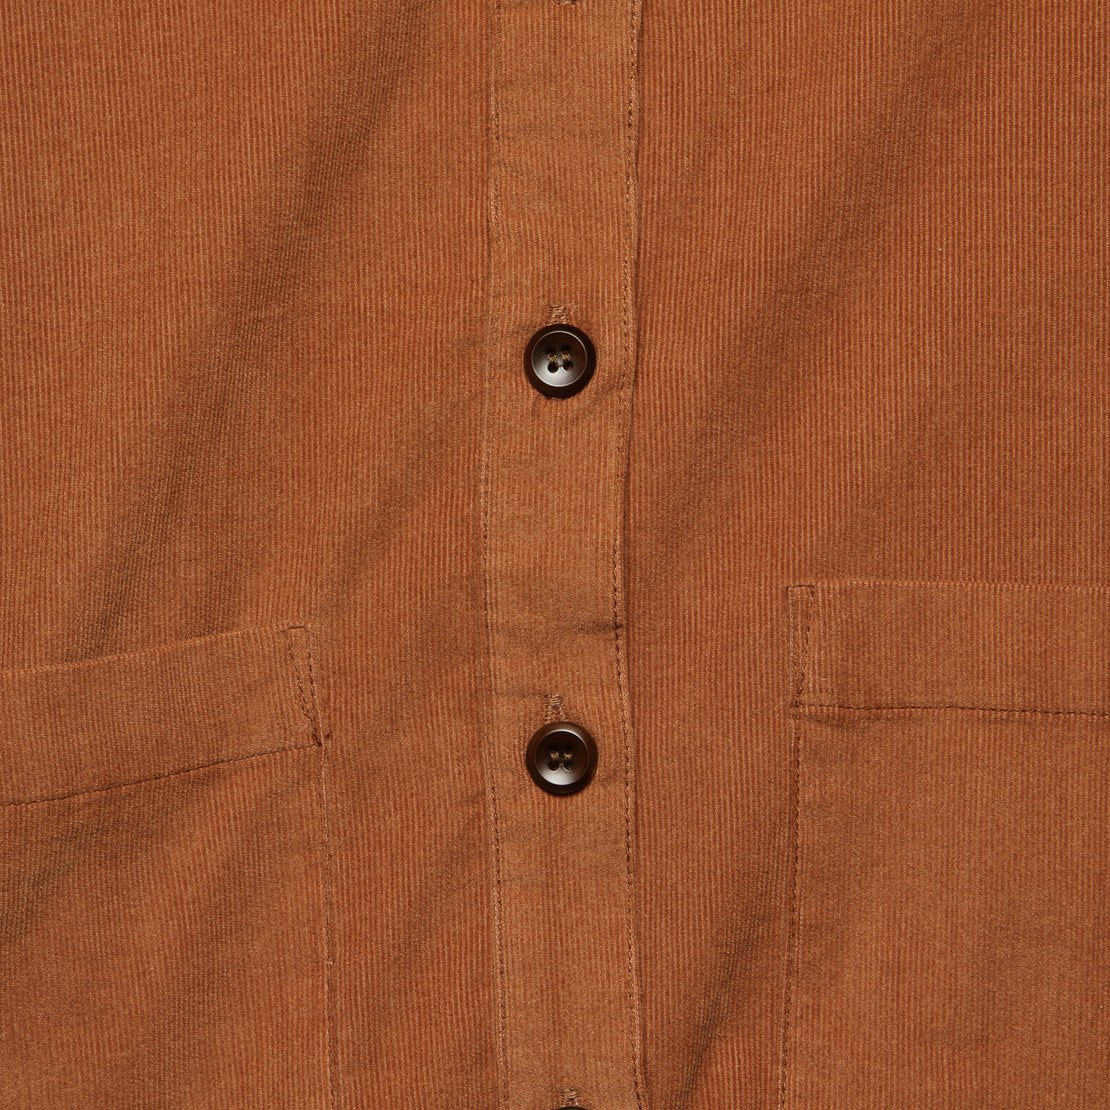 Kettering Overshirt - Rust Corduroy - Bridge & Burn - STAG Provisions - W - Outerwear - Coat/Jacket